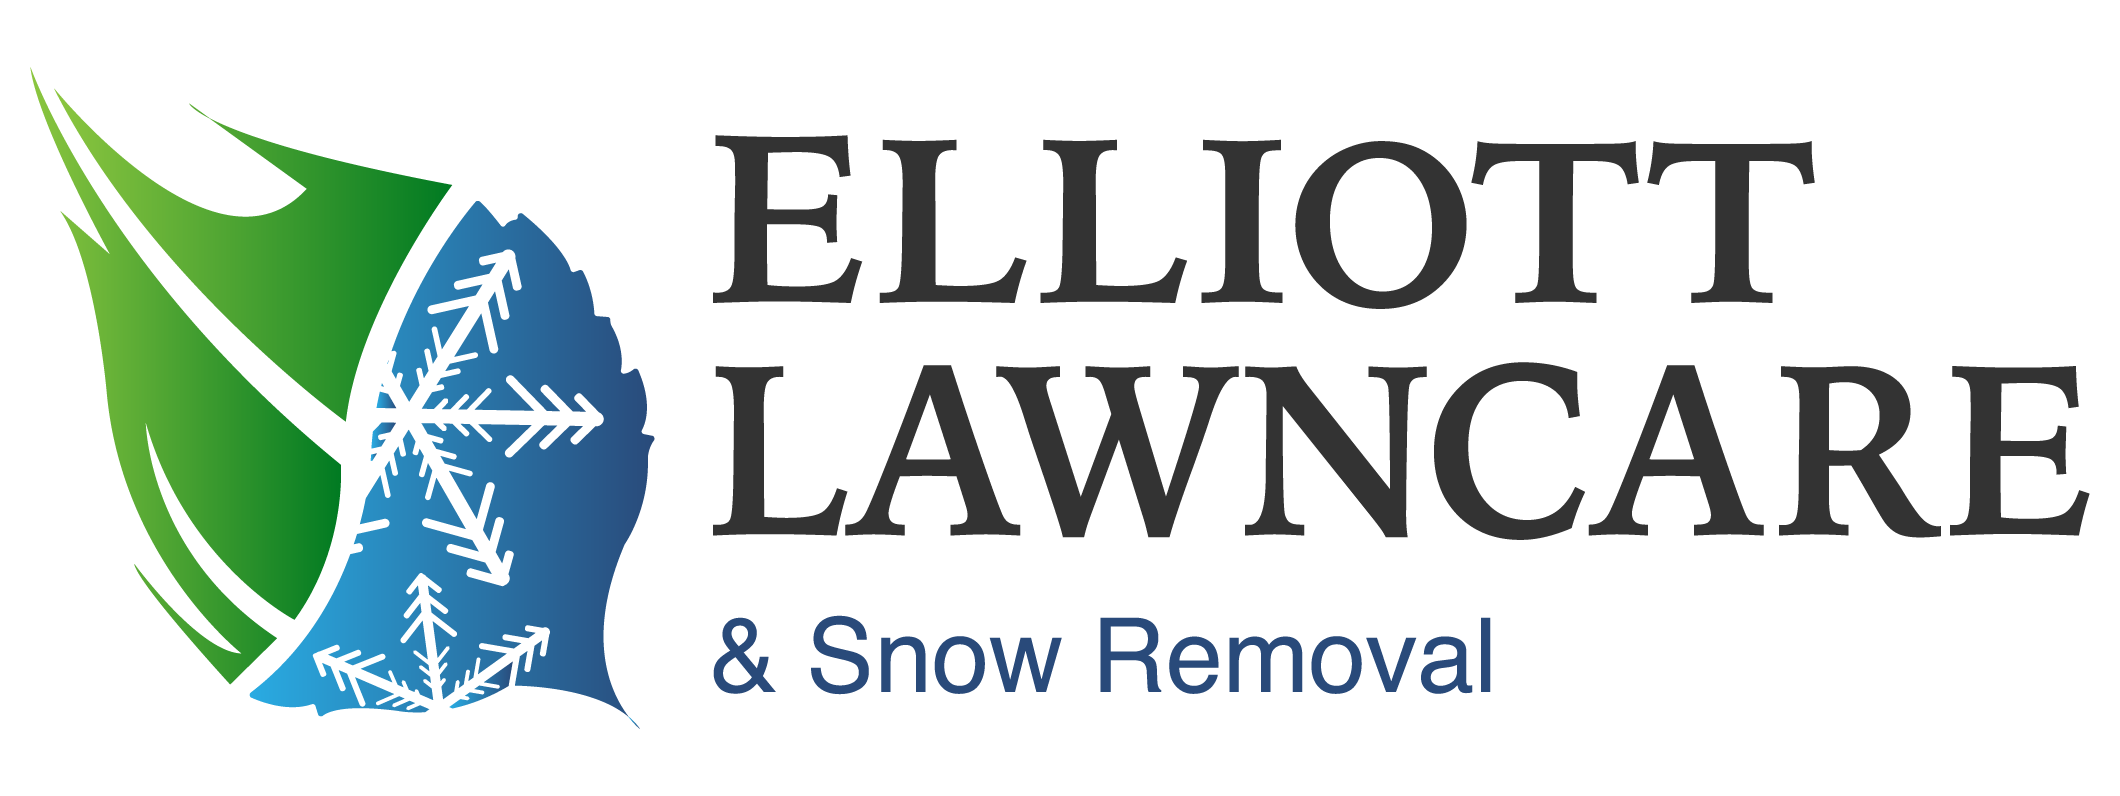 Elliott Lawncare Horizontal Logo